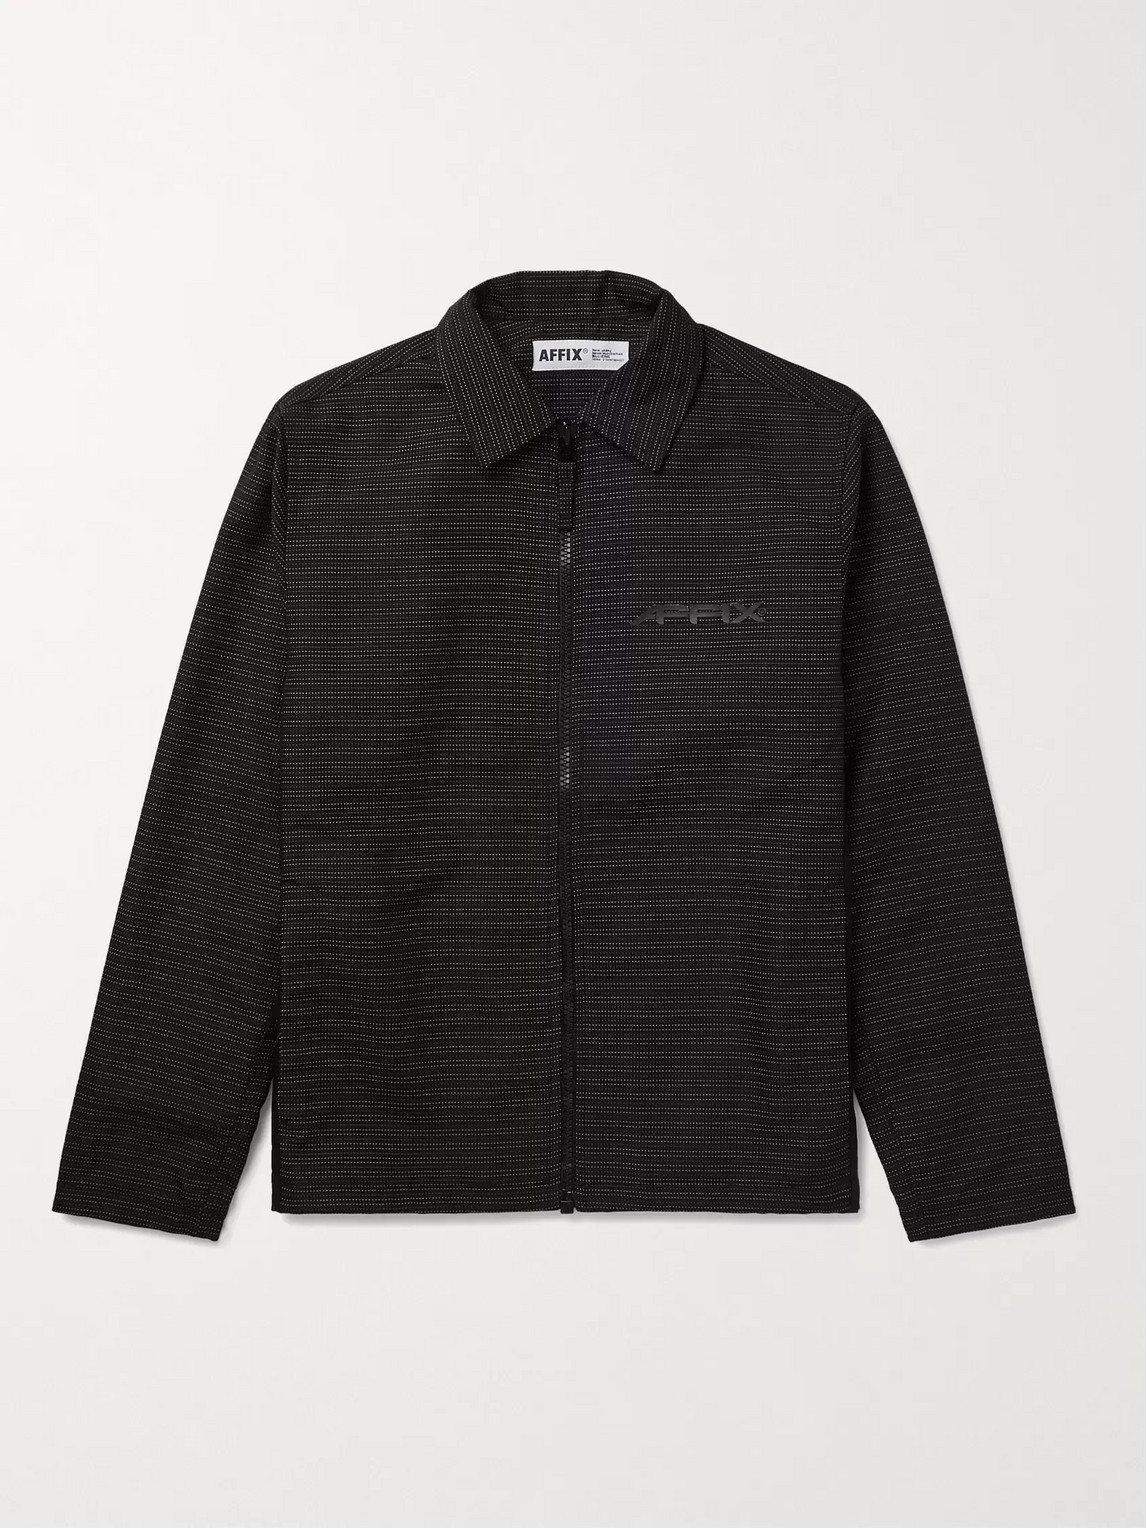 Affix Reflective Nylon Jacket In Black